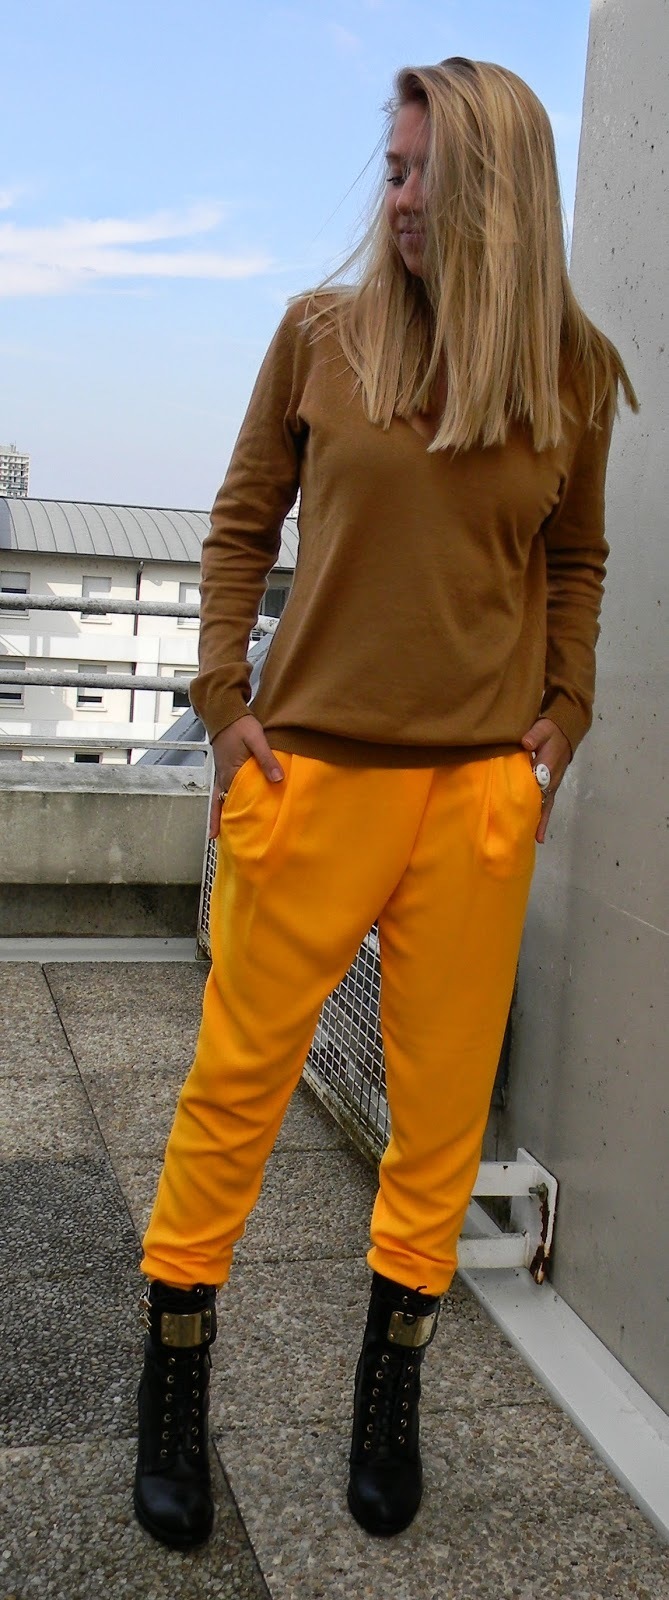 https://cdn.lookastic.com/looks/tobacco-long-sleeve-t-shirt-yellow-pajama-pants-black-leather-ankle-boots-original-3751.jpg